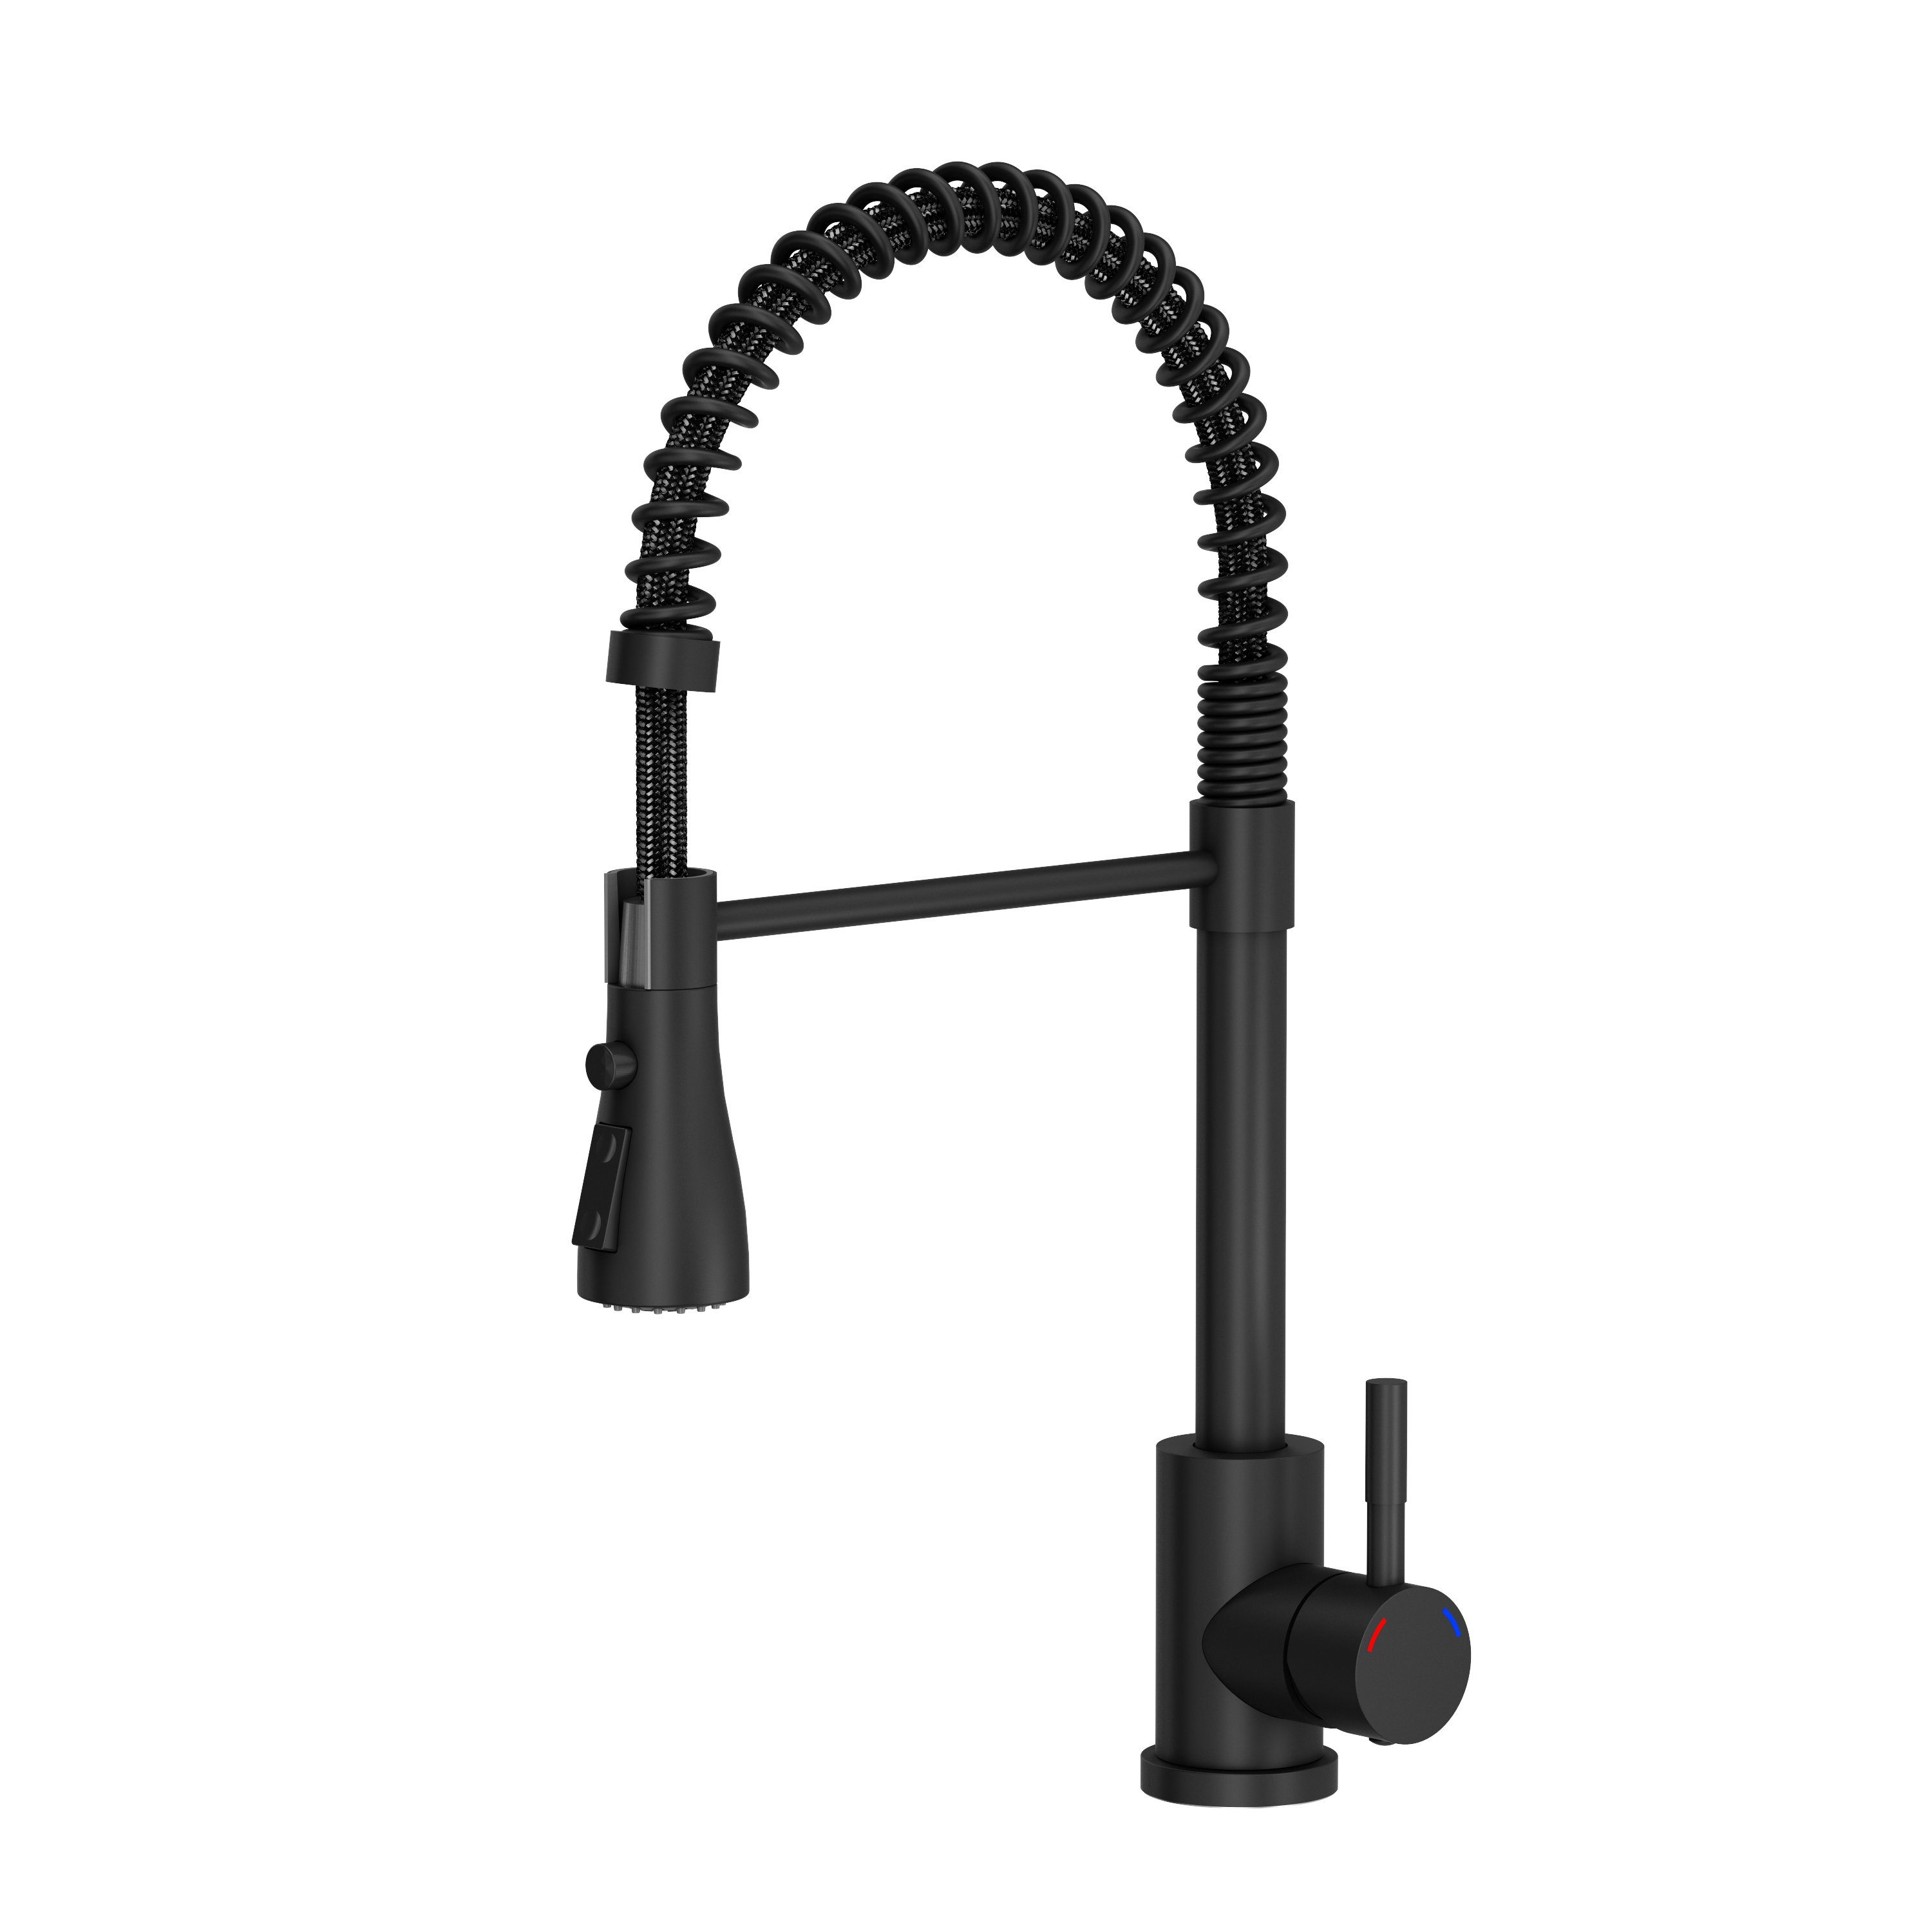 Quadron Salma flexible tap with spray & water stop function, Matte Black